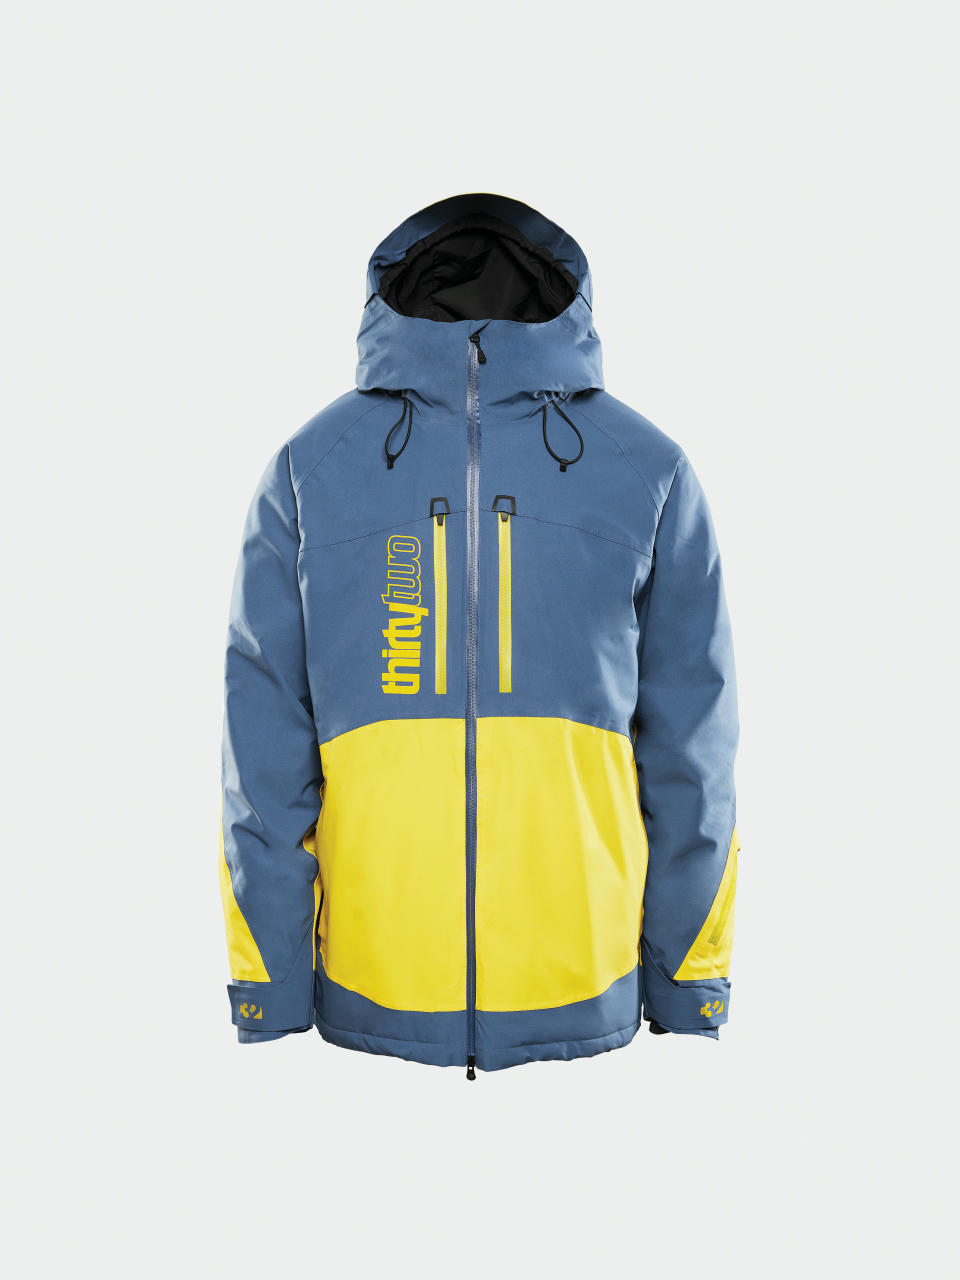 ThirtyTwo Lashed Insulated Snowboard jacket (blue/yellow)